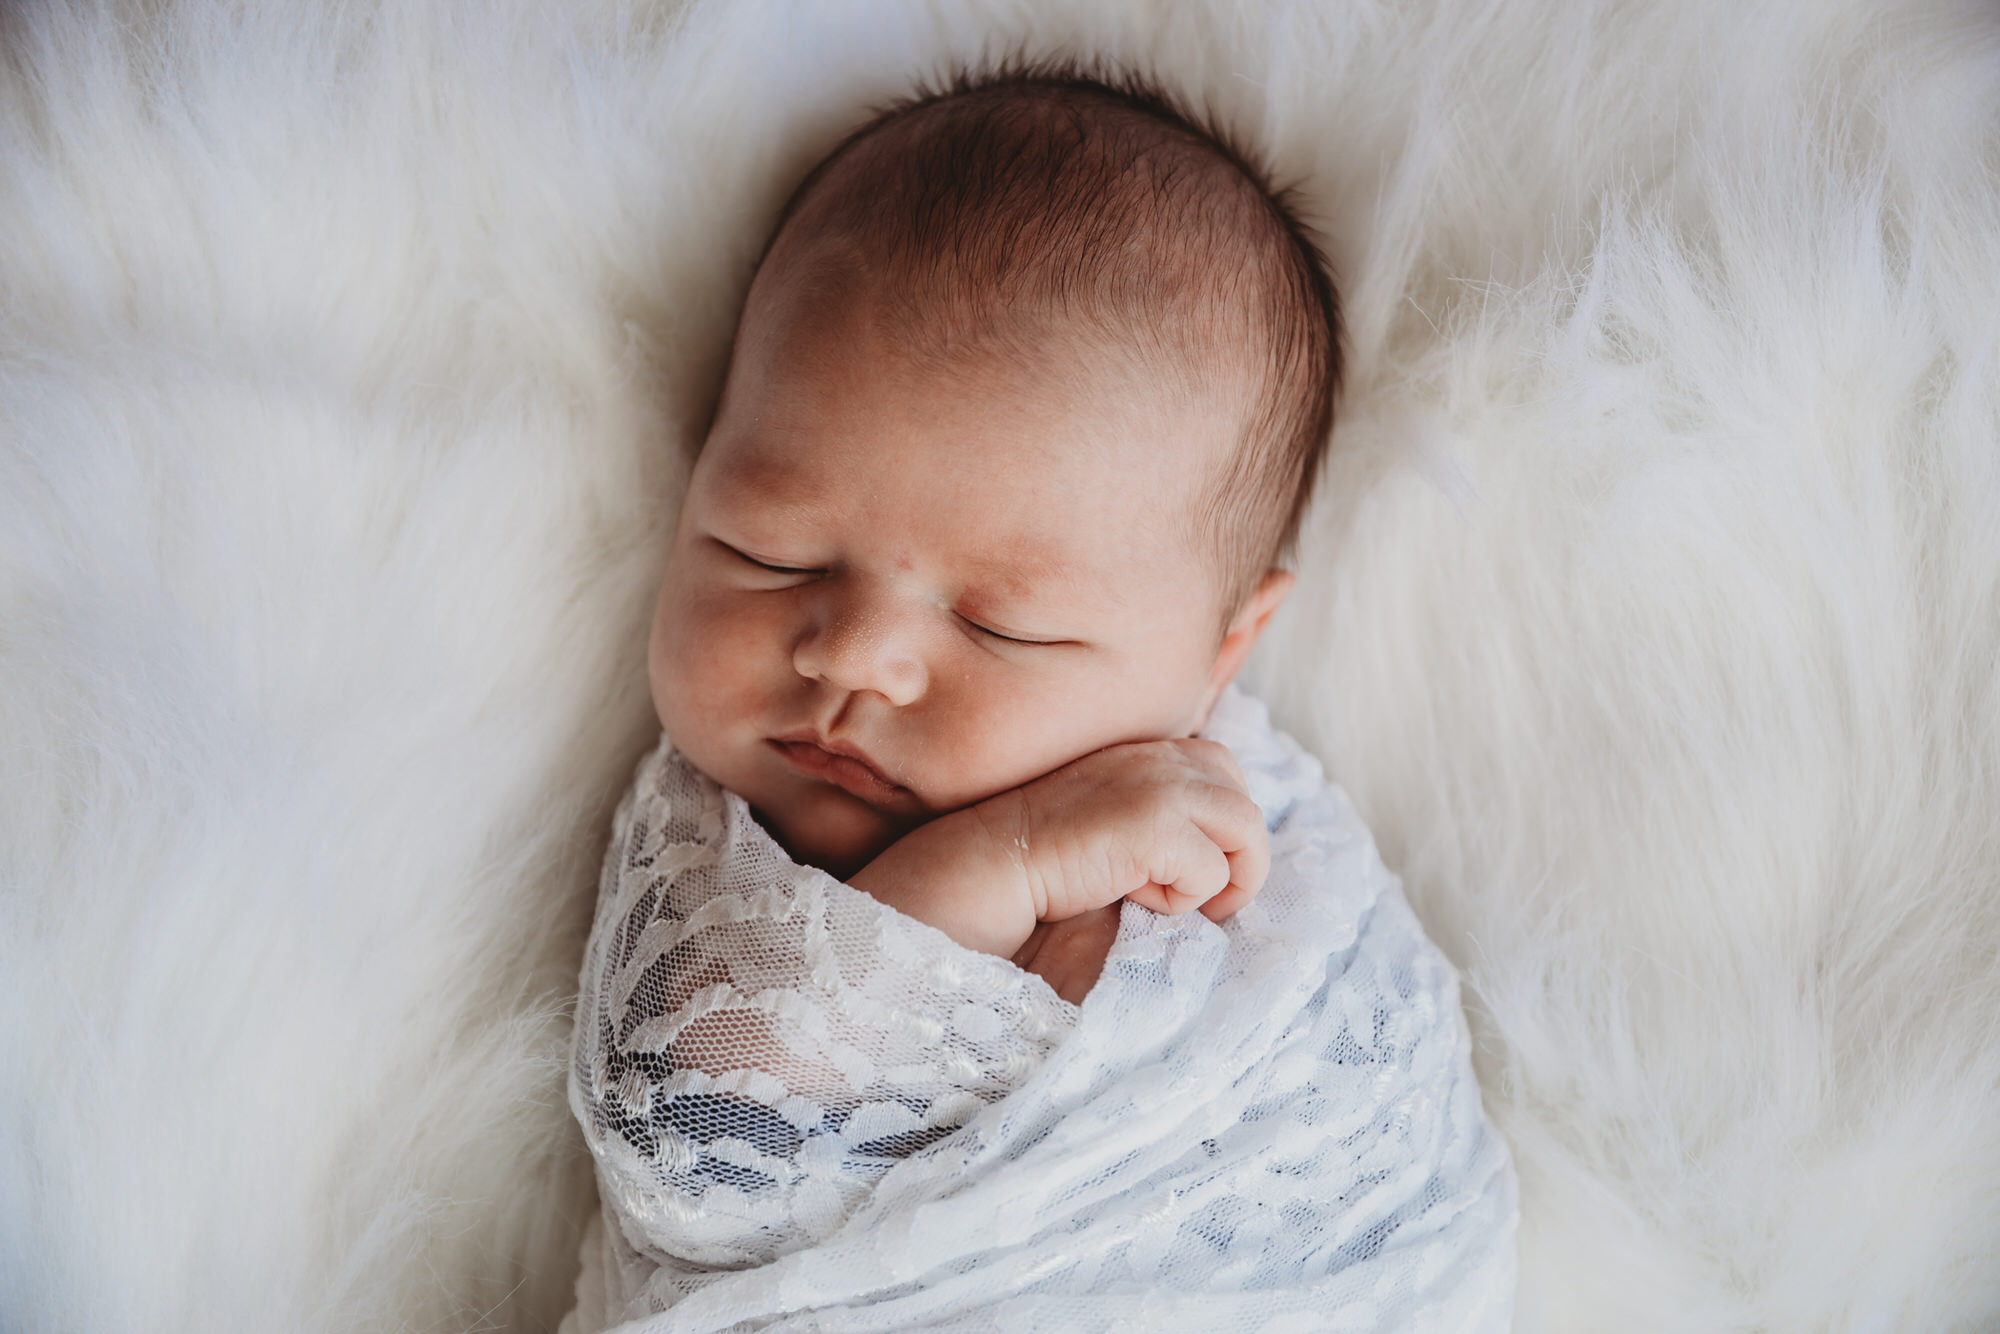 Tillsonburg Newborn Photographer - newborn sleeping